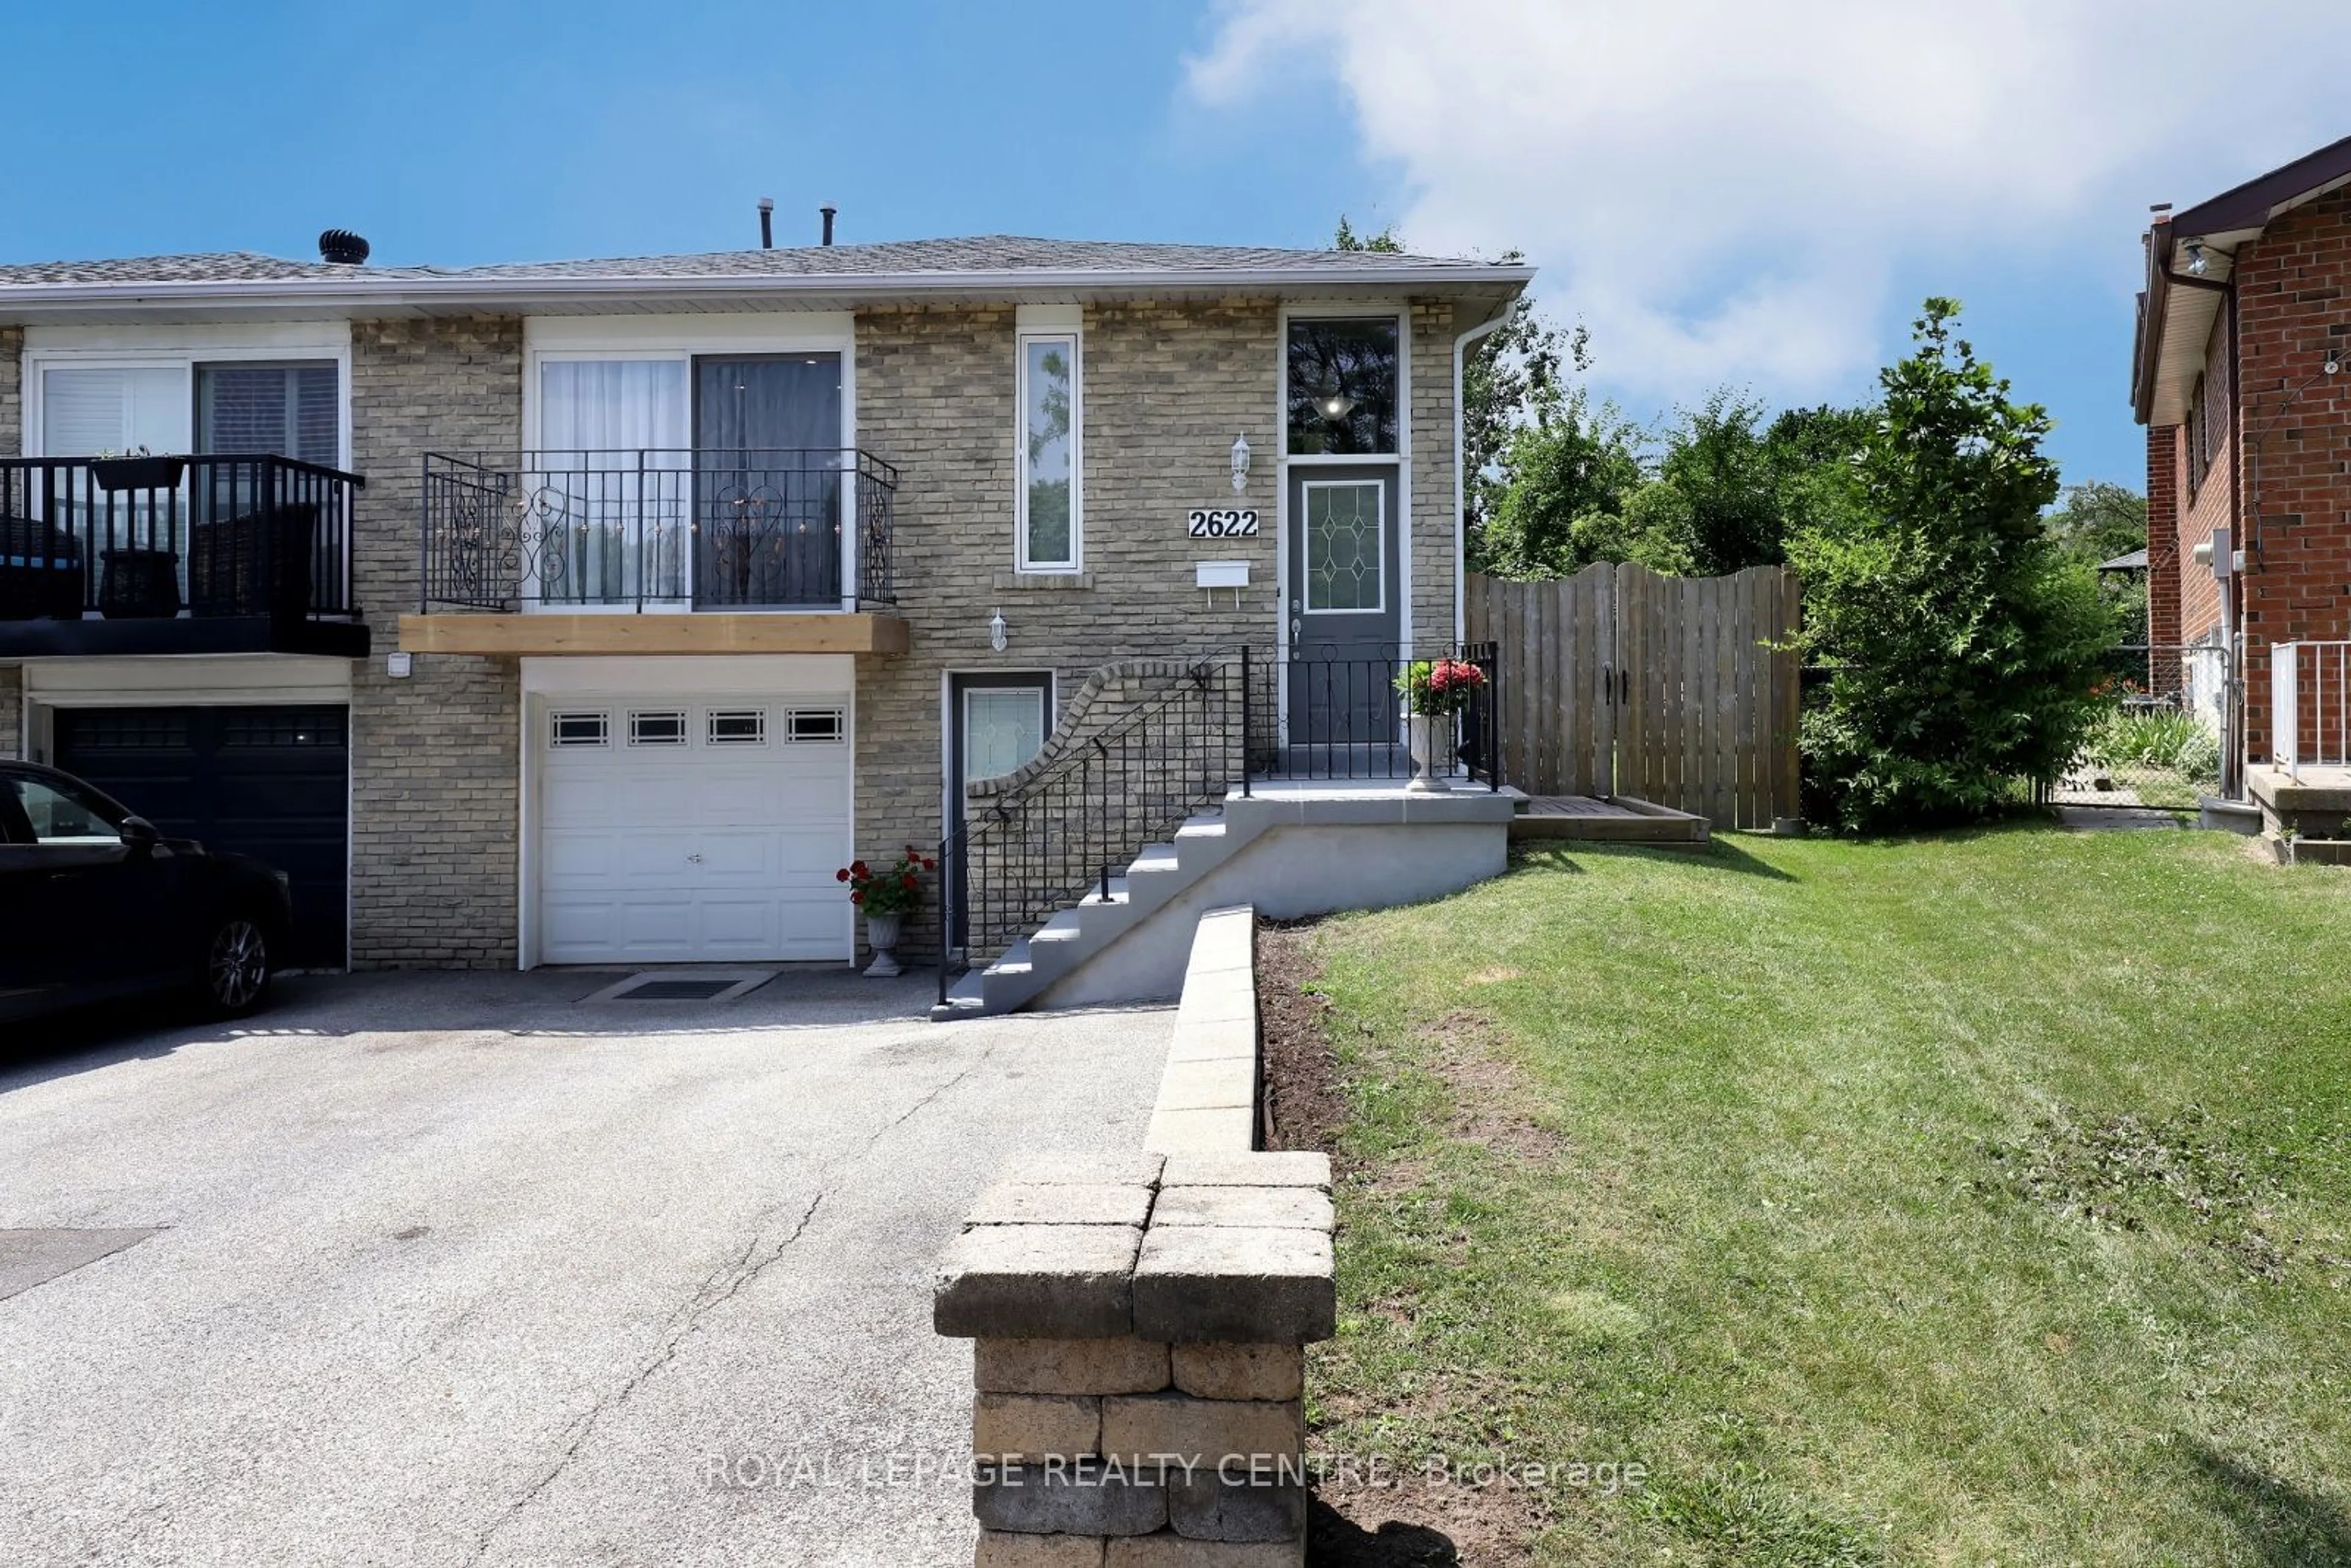 Frontside or backside of a home for 2622 Crystalburn Ave, Mississauga Ontario L5B 2N8